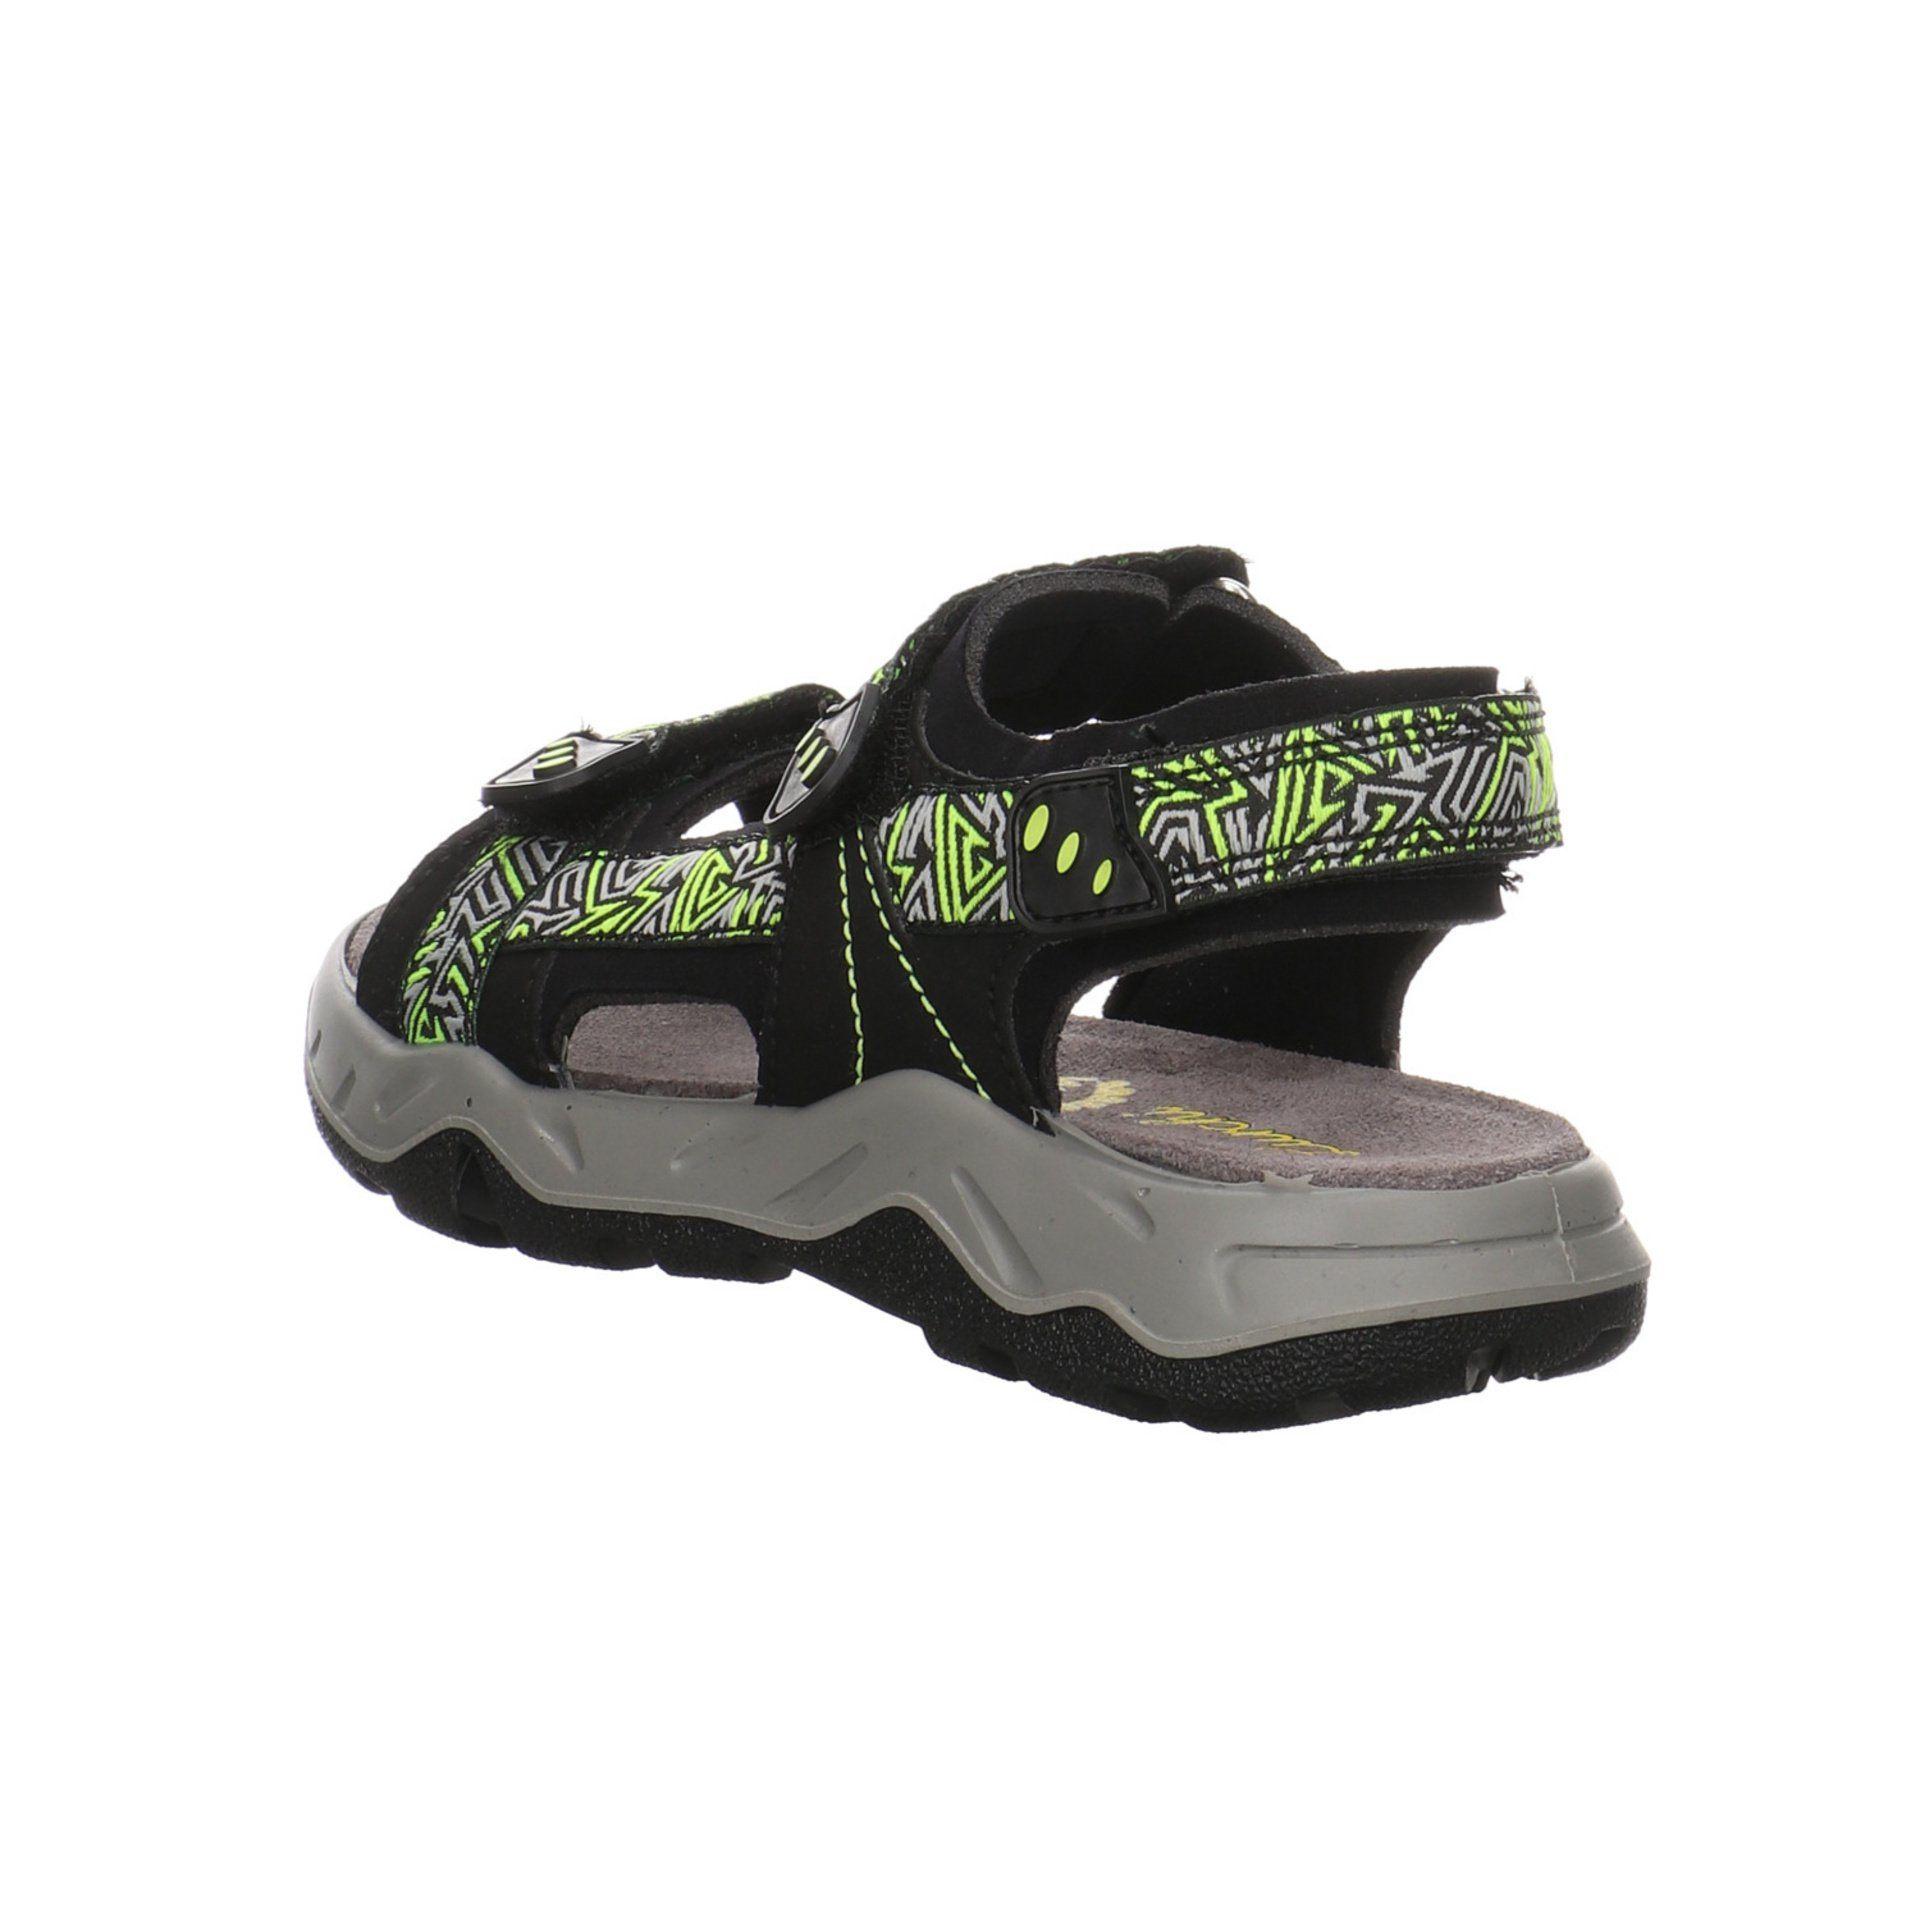 Salamander Lurchi Synthetikkombination Sandale Kinderschuhe Sandale Jungen Black Odono Multi Sandalen Schuhe